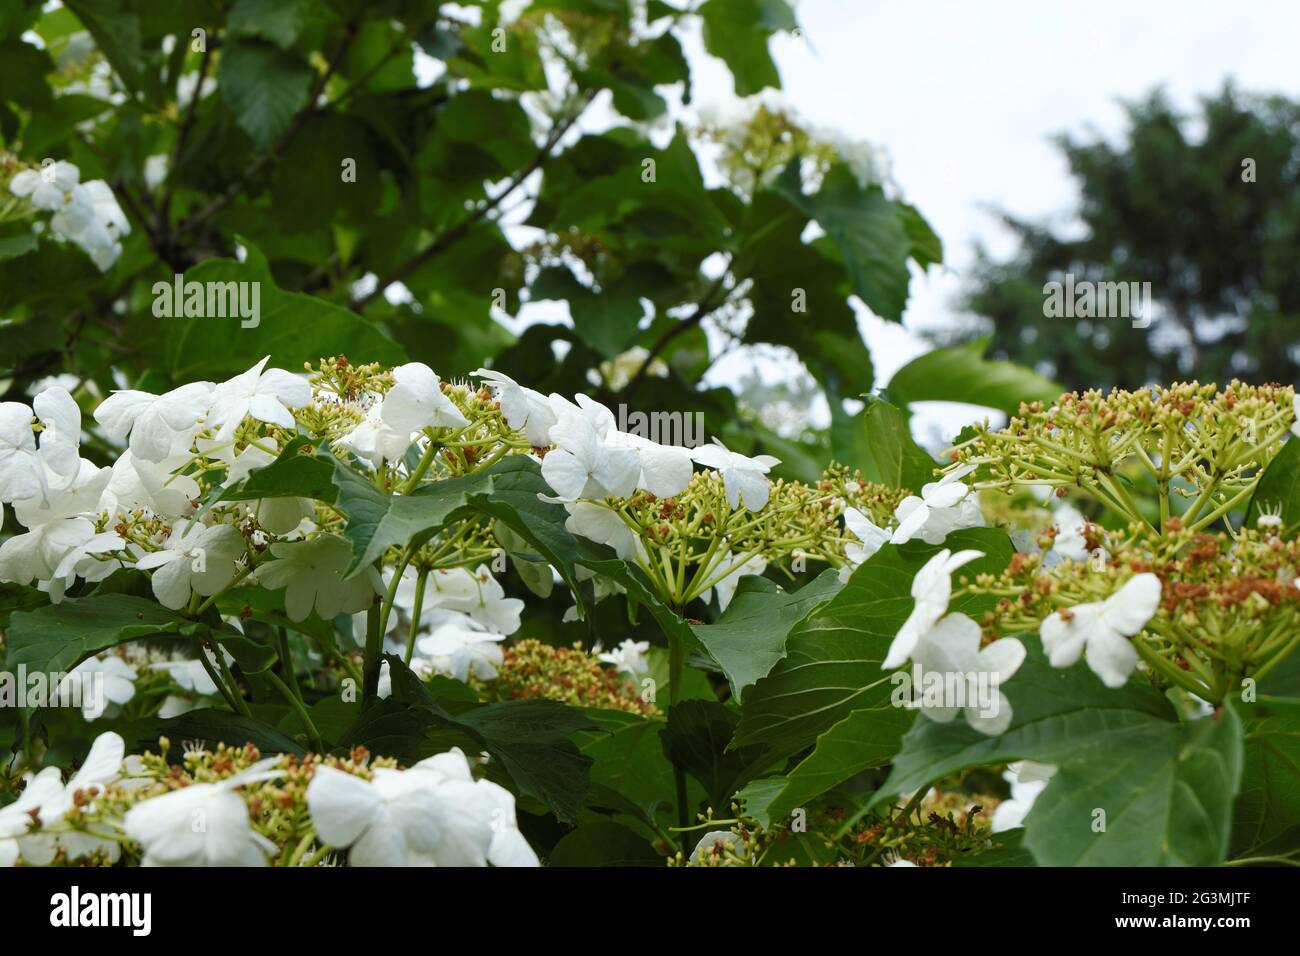 Weiße blühende Viburnum-Blüten mit winzigen Knospen-Beeren im Blütenstand. Selektiver Fokus. Stockfoto